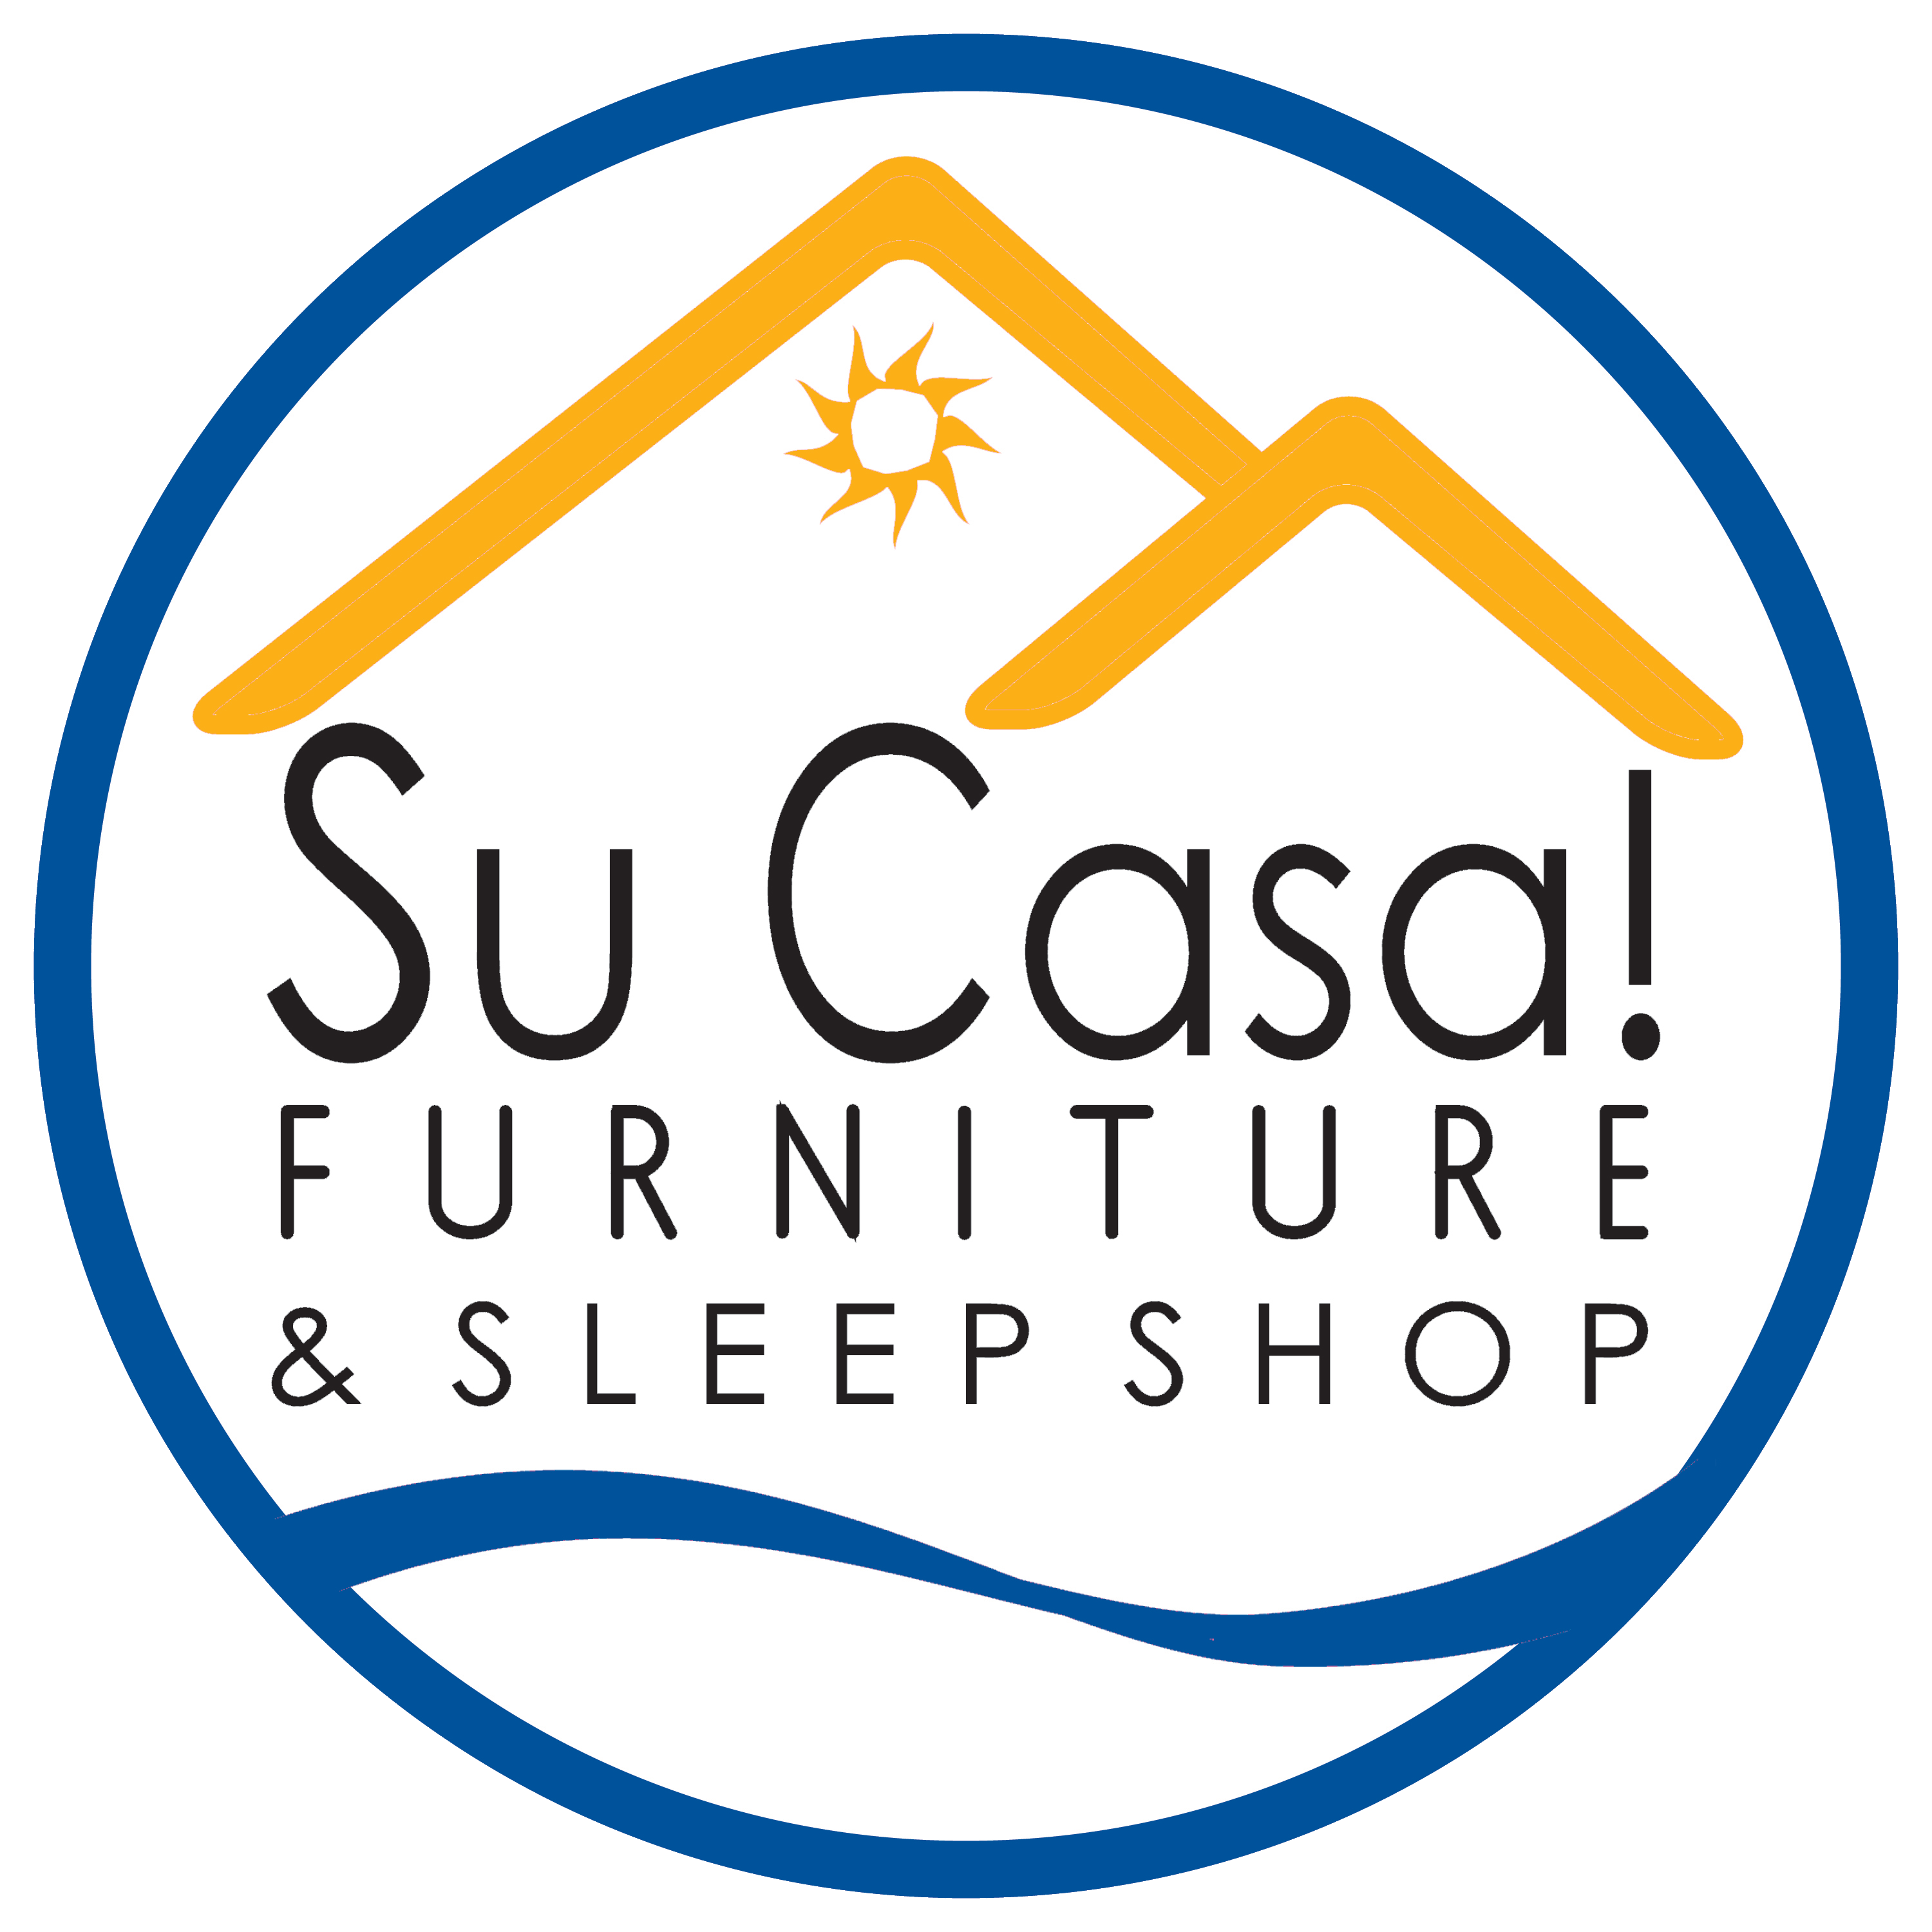 Su Casa! Furniture & Sleep Shop